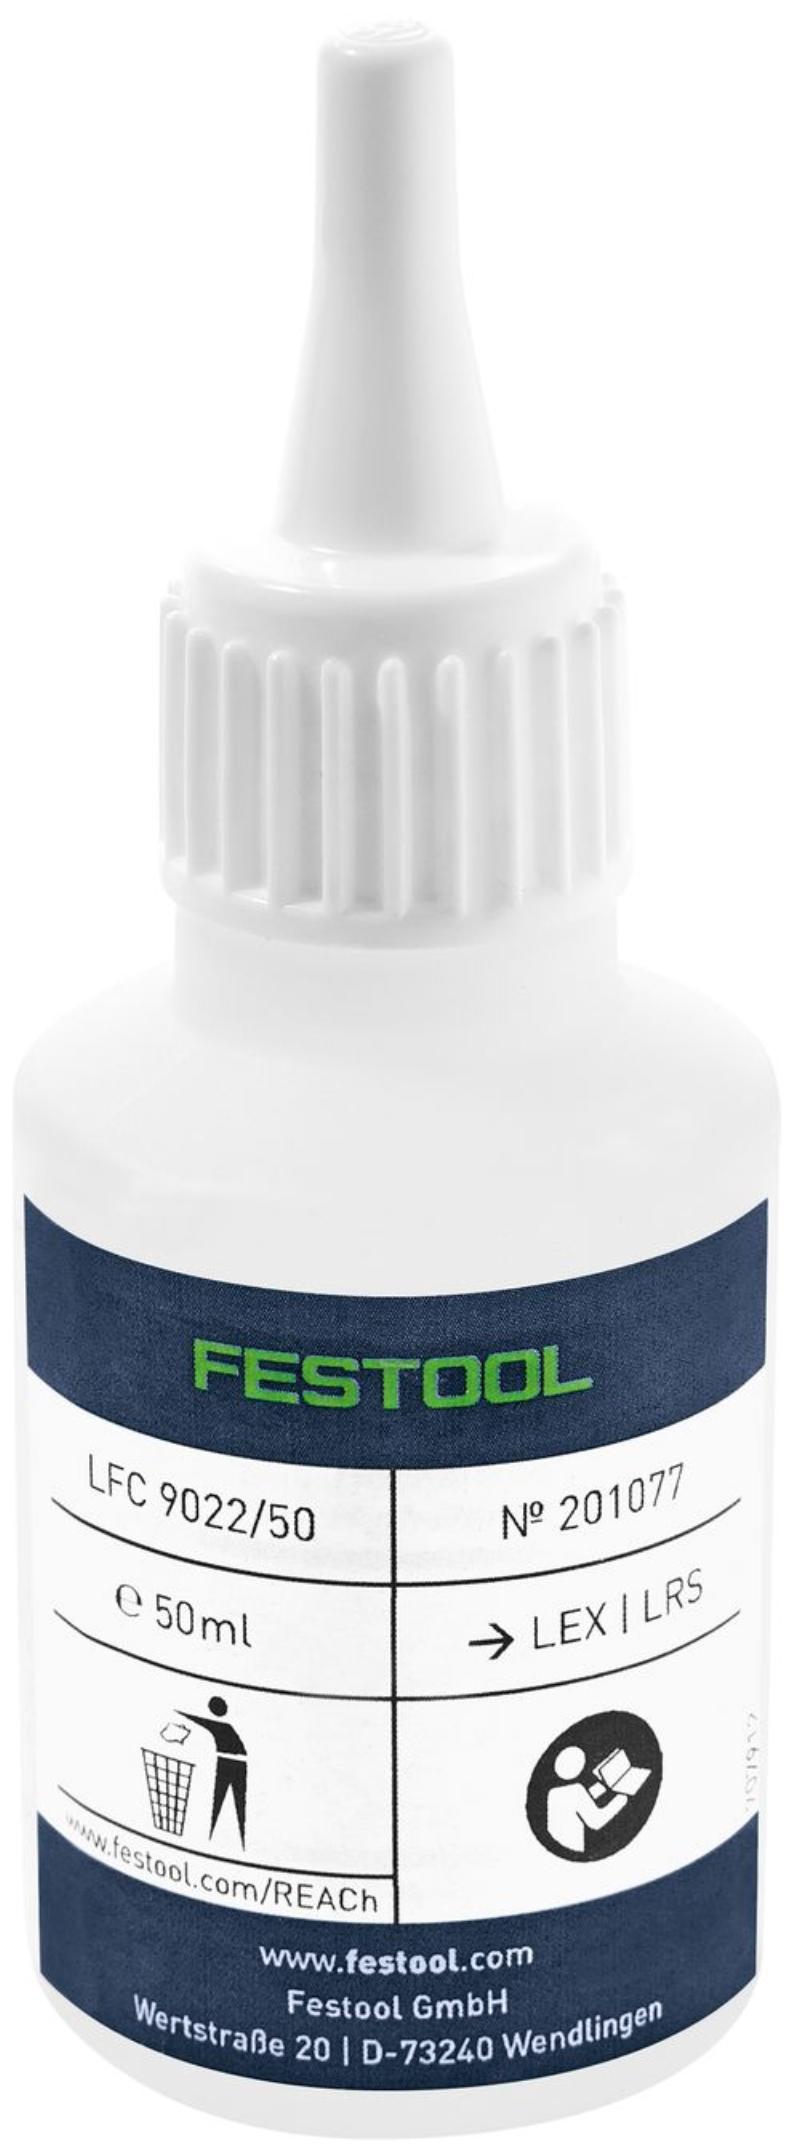 Festool Rense- og smøreolie LFC 9022/50